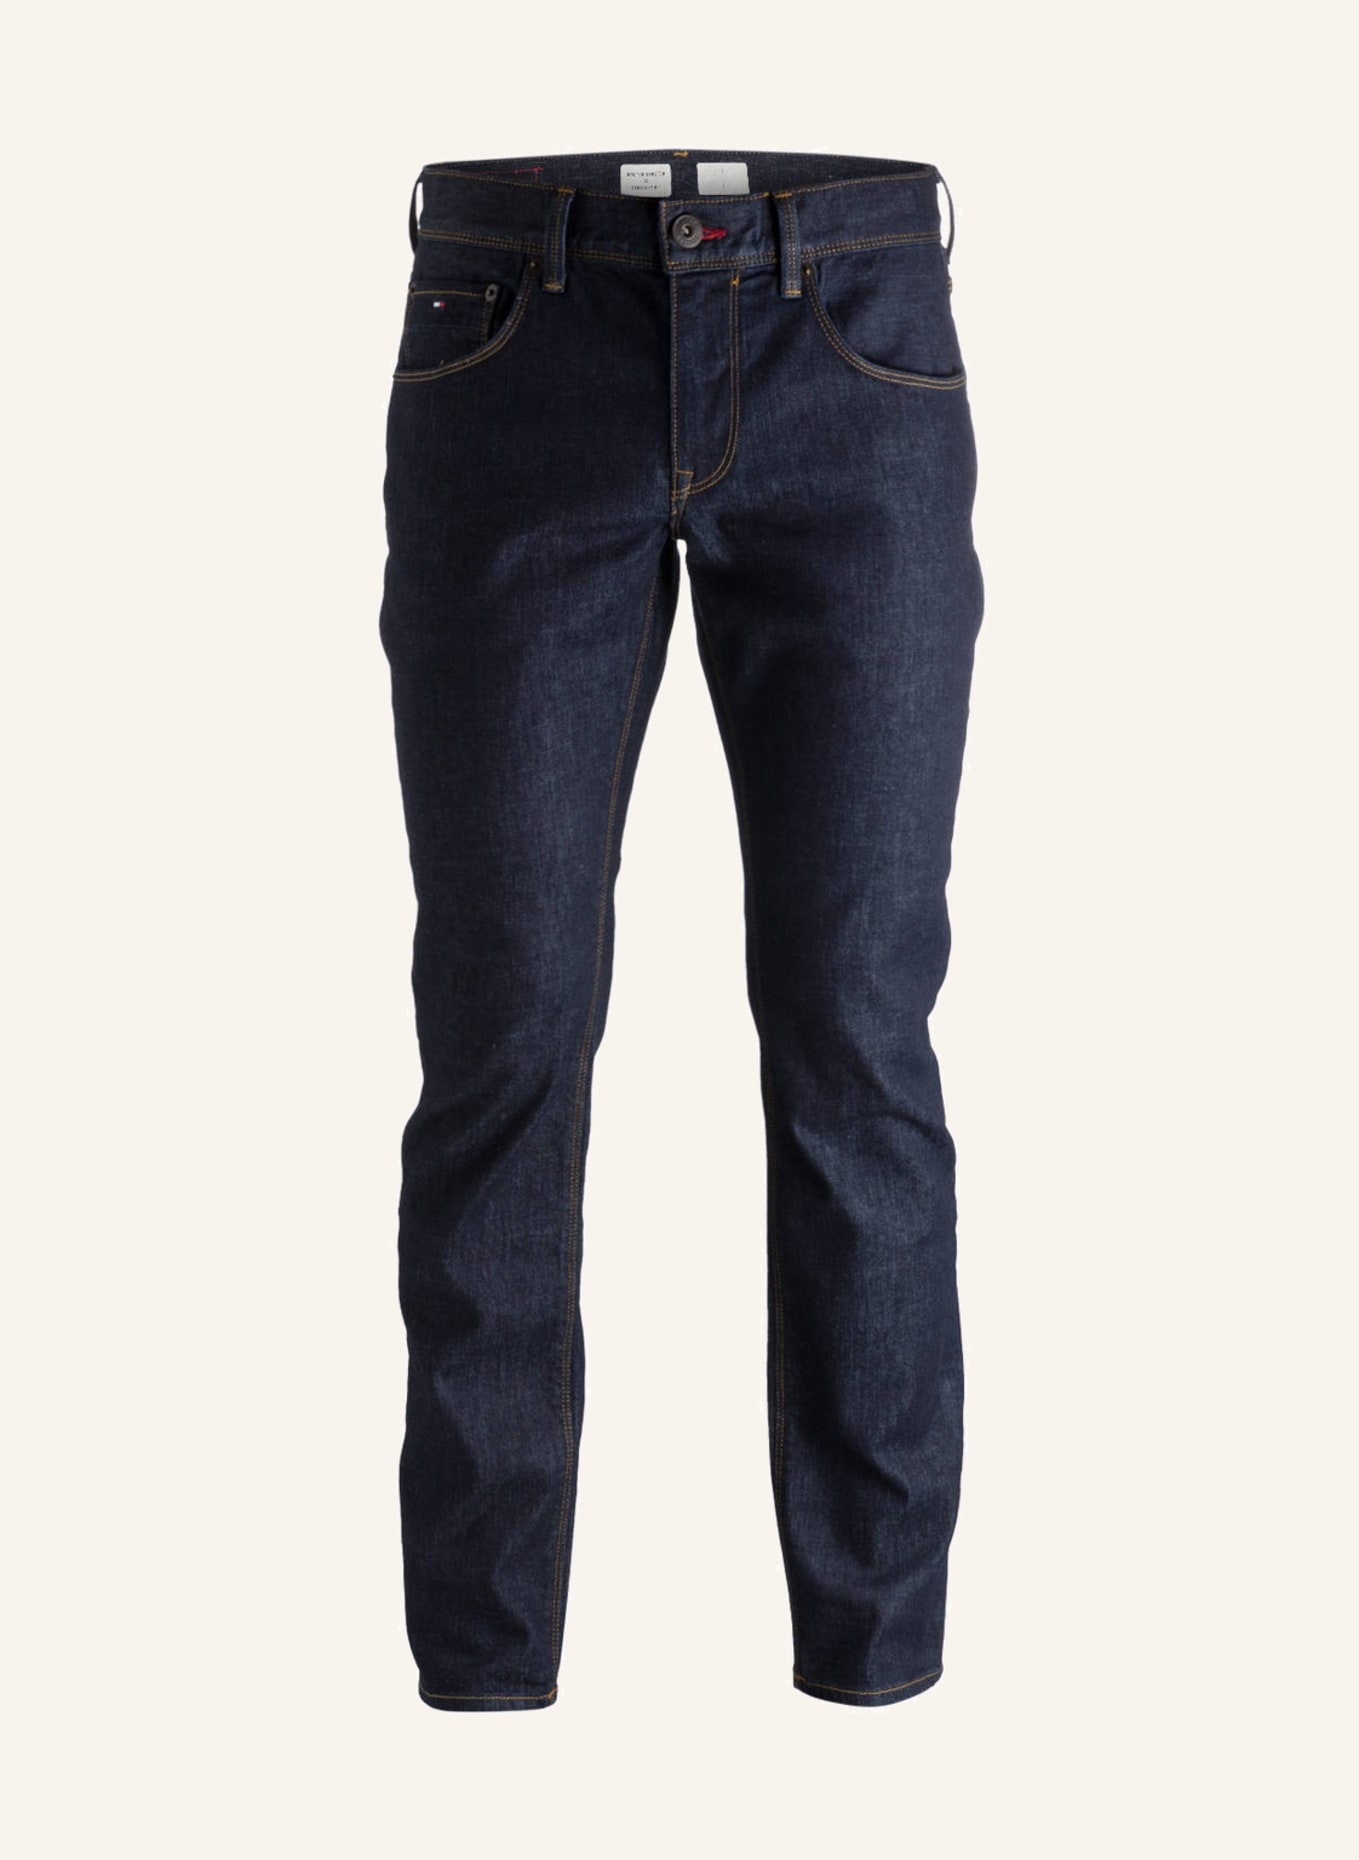 TOMMY HILFIGER Jeans DENTON Straight Fit, Farbe: 919 rinsed (Bild 1)